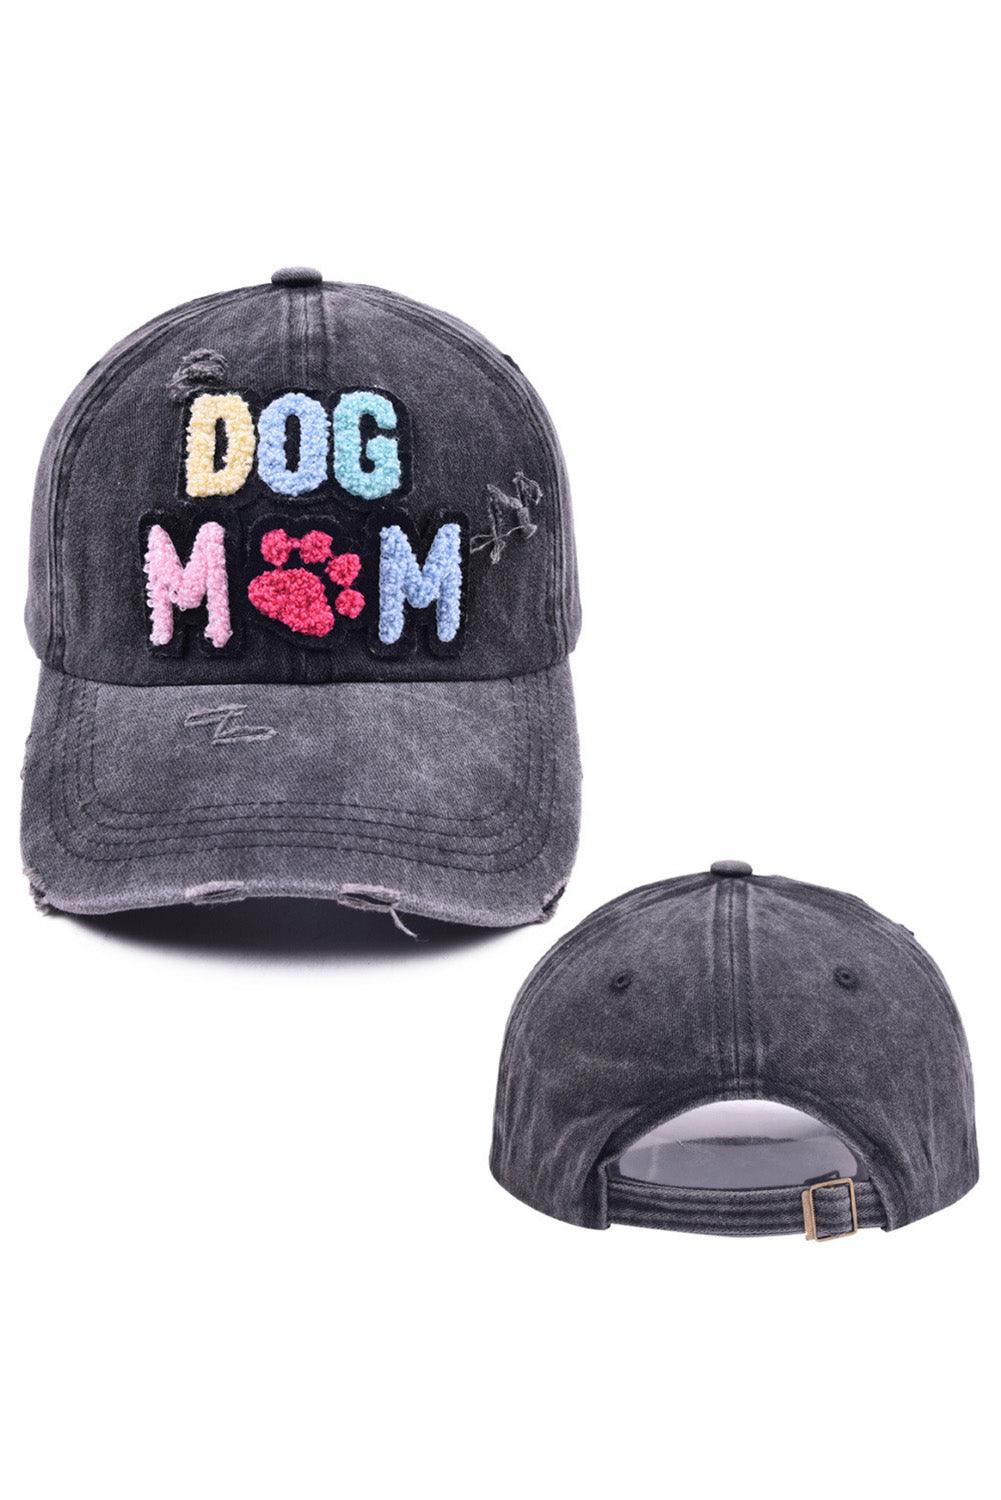 Black "Dog Mom" Distressed Denim Baseball Cap - God's Girl Gifts And Apparel